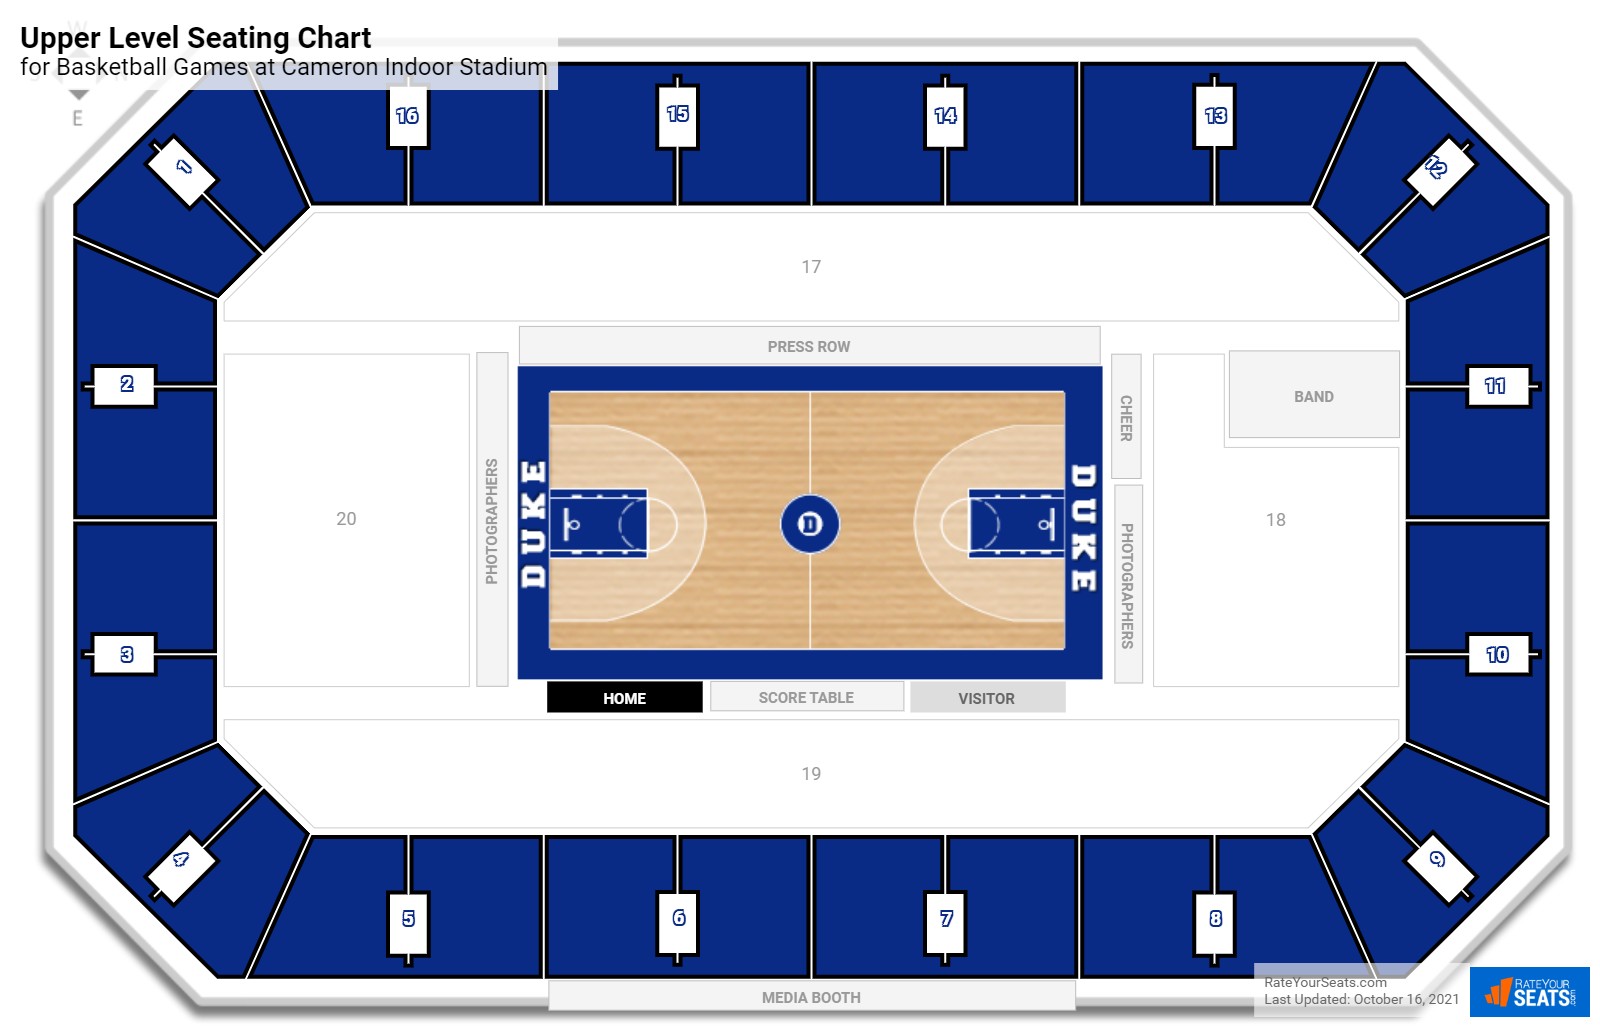 Basketball Upper Level Seating Chart at Cameron Indoor Stadium